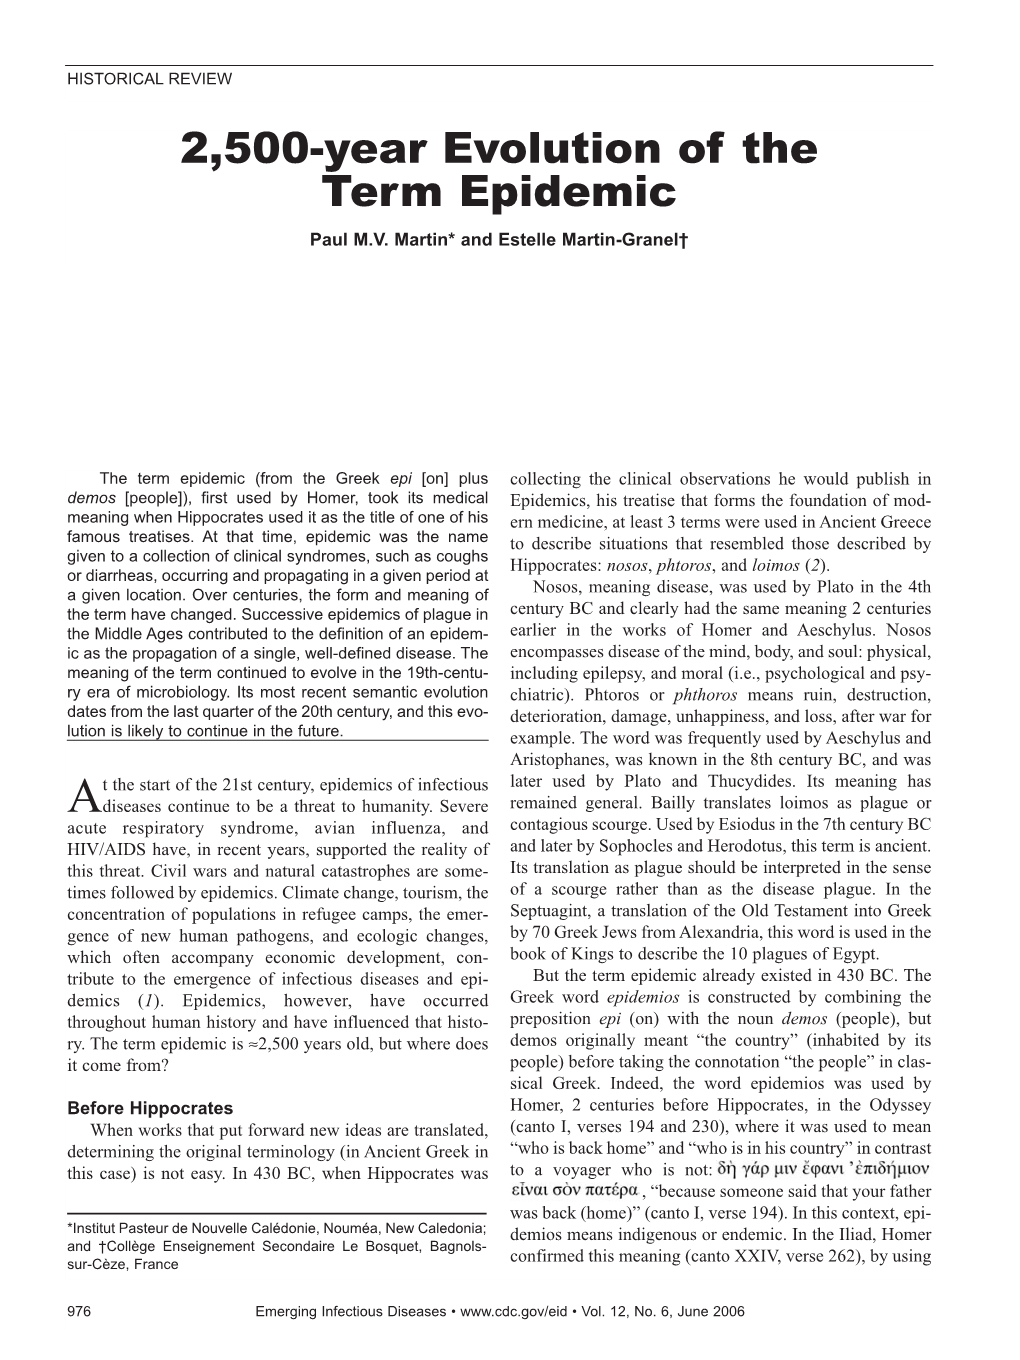 2,500-Year Evolution of the Term Epidemic Paul M.V